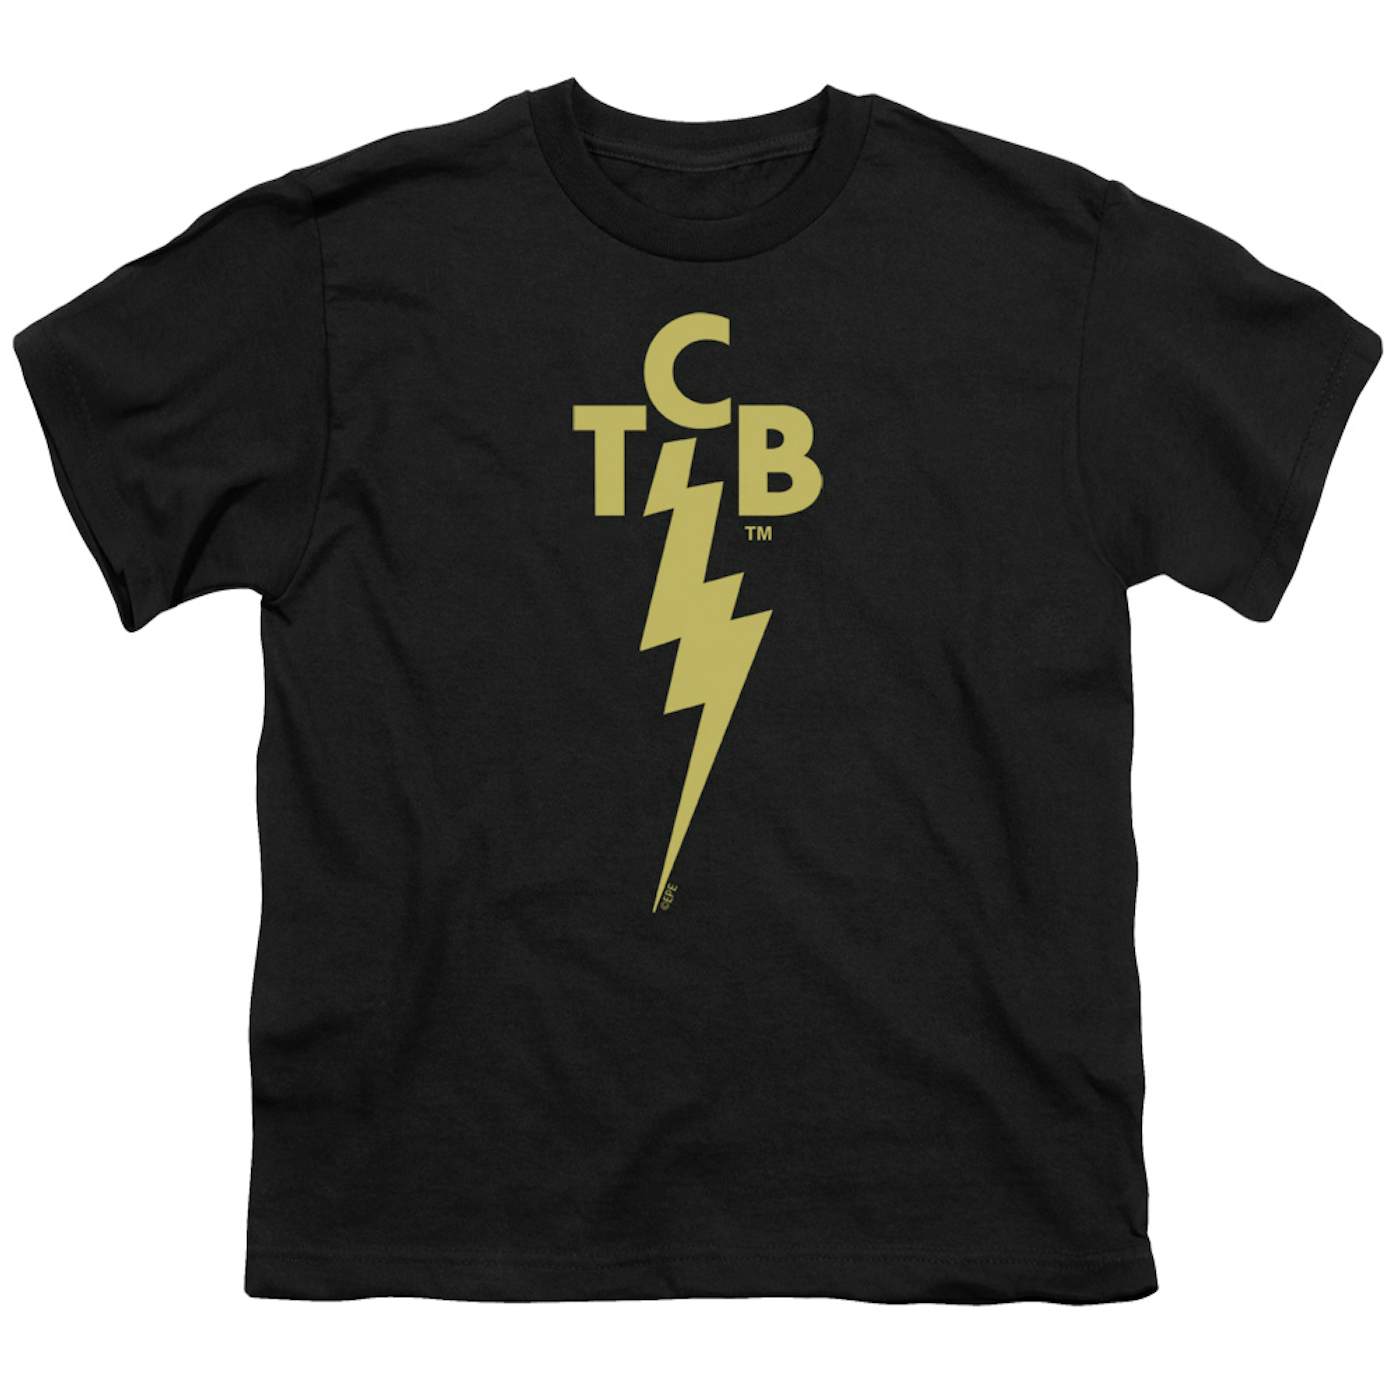 Elvis Presley Youth Tee | TCB LOGO Youth T Shirt